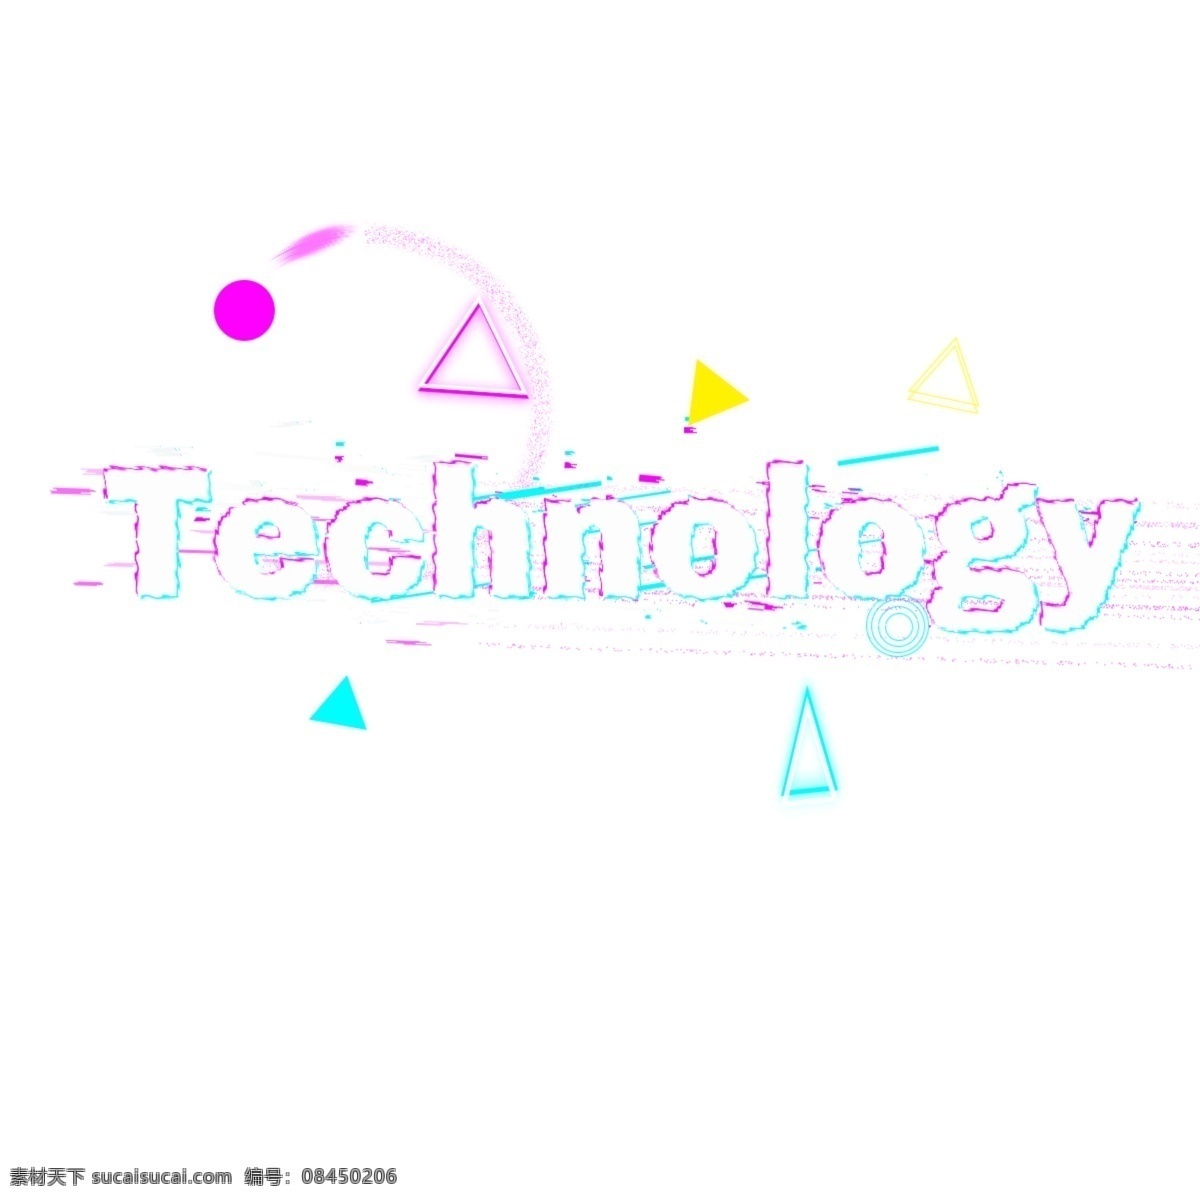 glitch techonology 字体 理工科 故障风格 trangle 元素 水平线 圆形元素 毛刺字体设计 白色和紫色